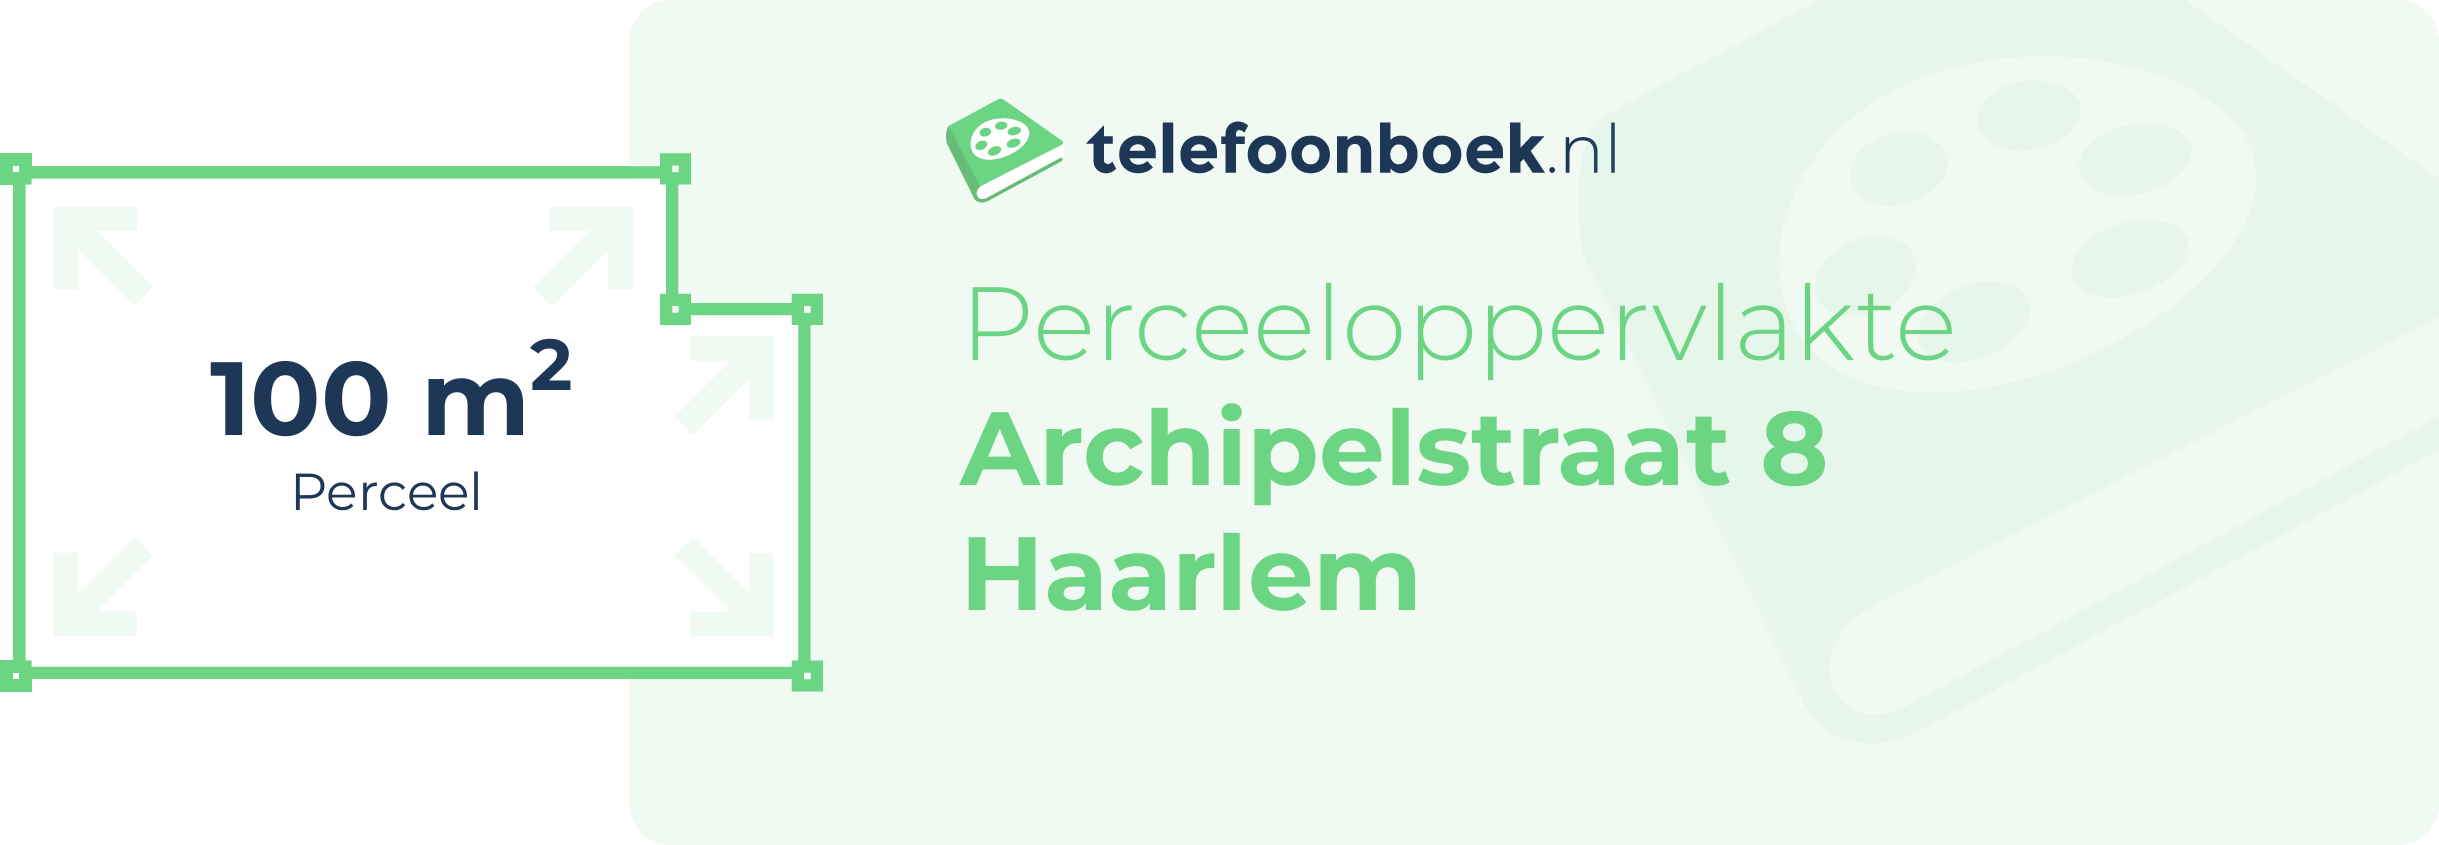 Perceeloppervlakte Archipelstraat 8 Haarlem